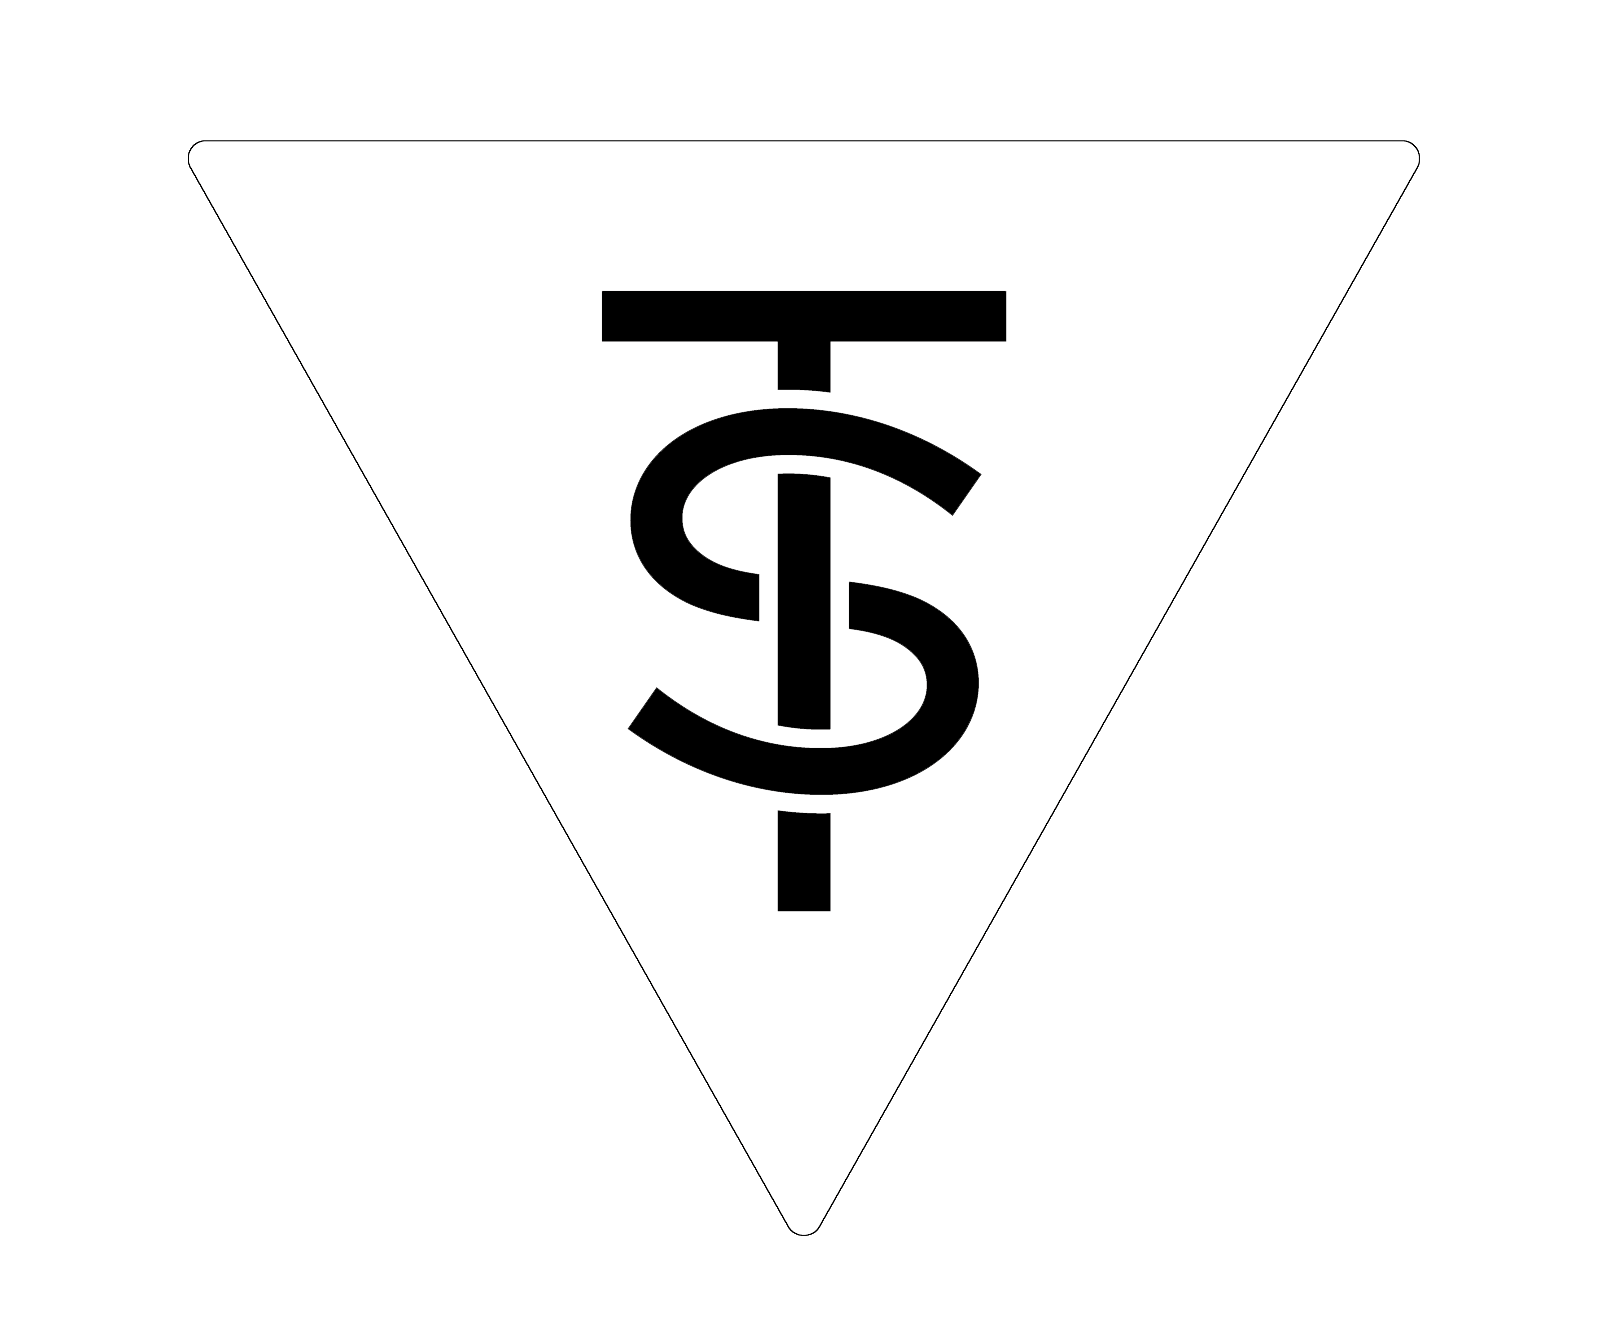 TS Logo - LogoDix